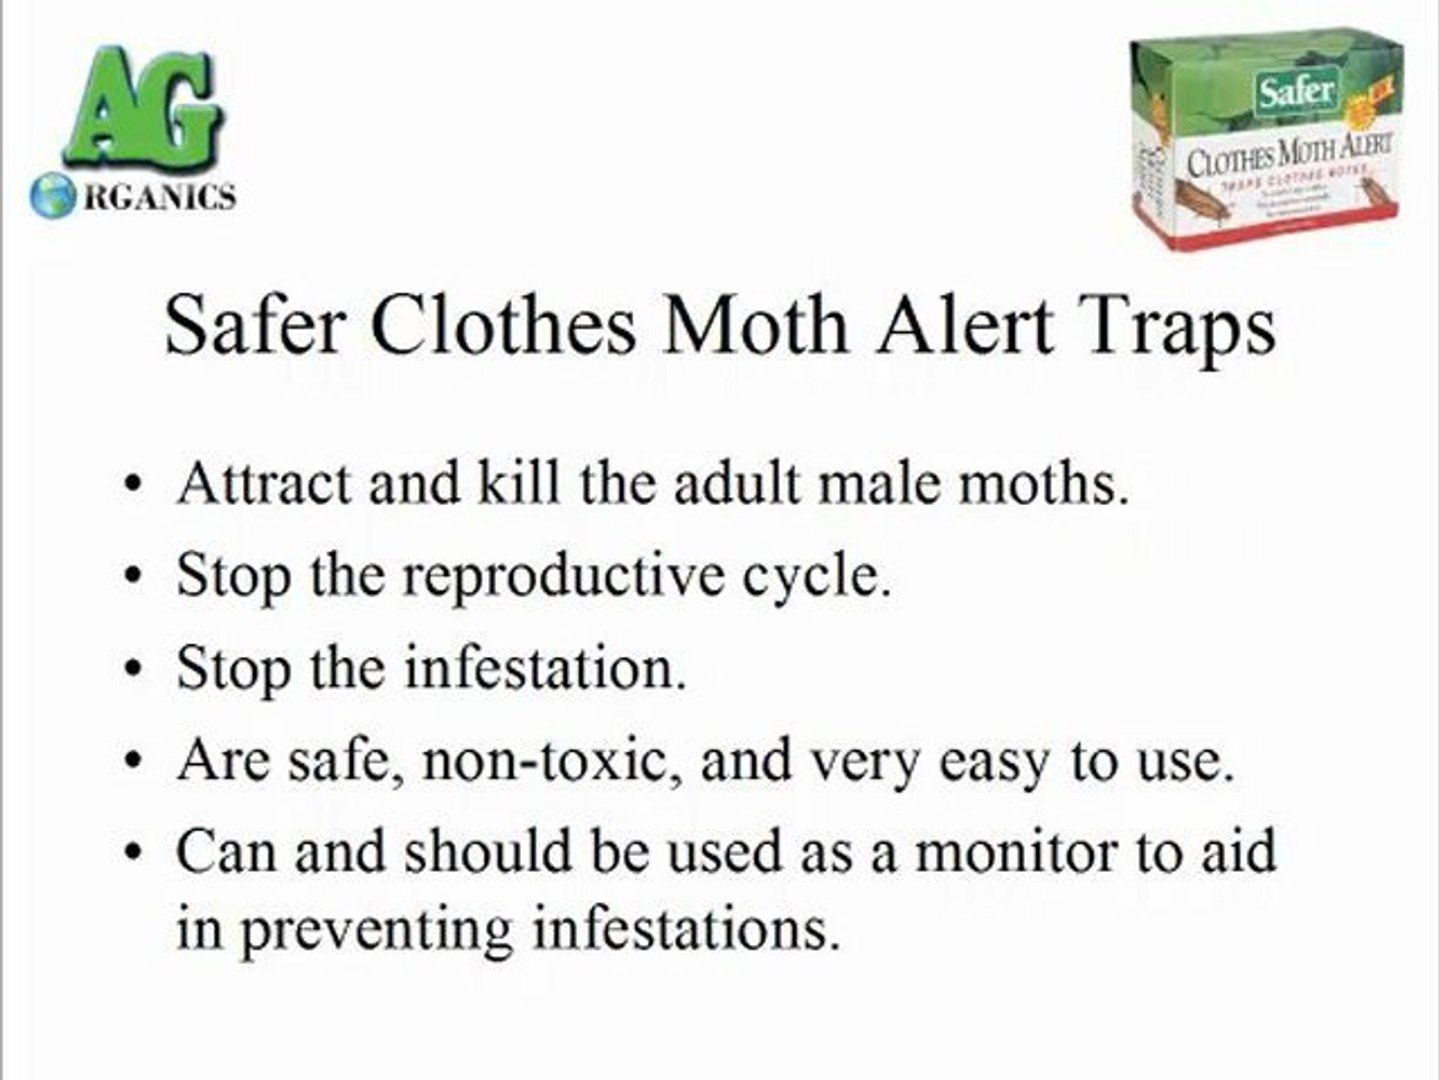 Clothes Moth Alert - Grow Organic